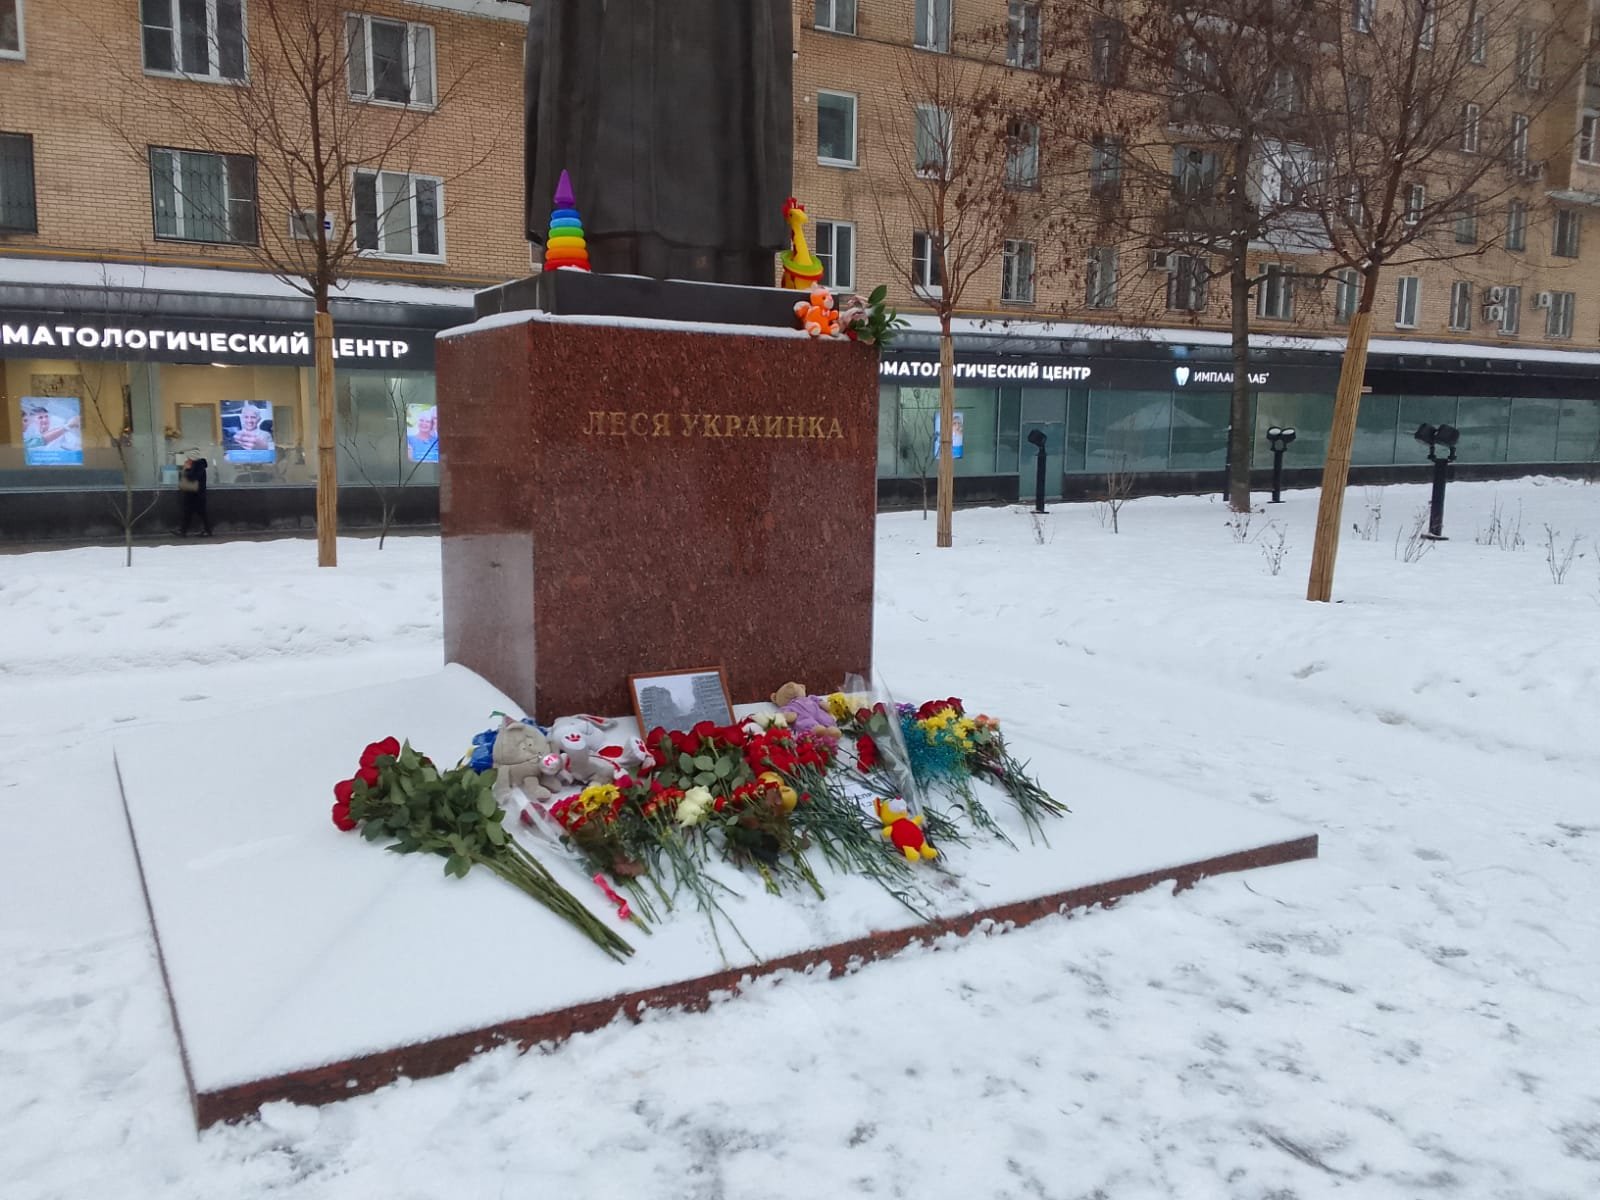 Lesya Ukrainka statue Moscow, Russia, on January 17.